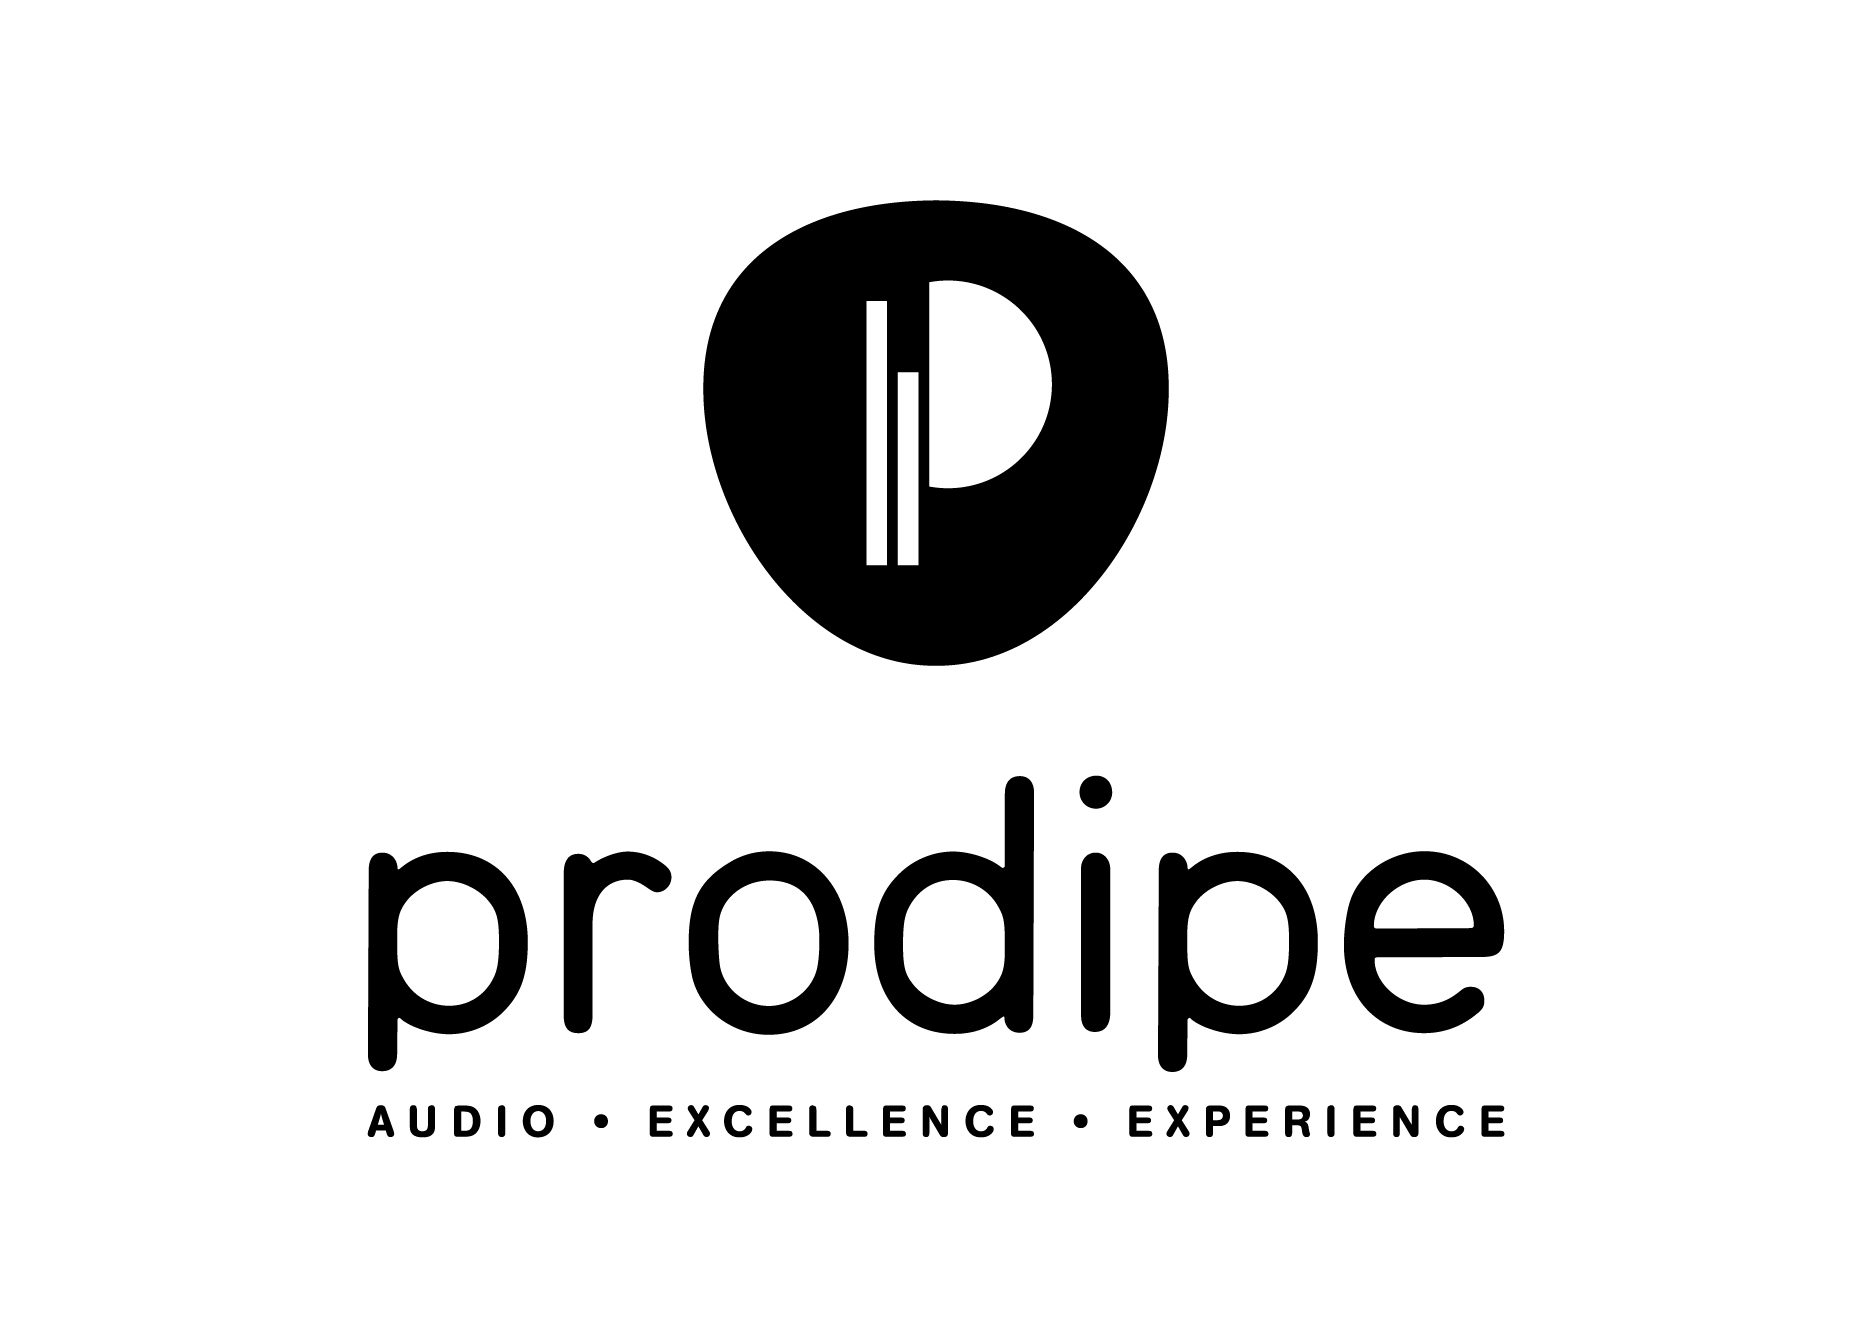 Logo Prodipe 3 - JPG